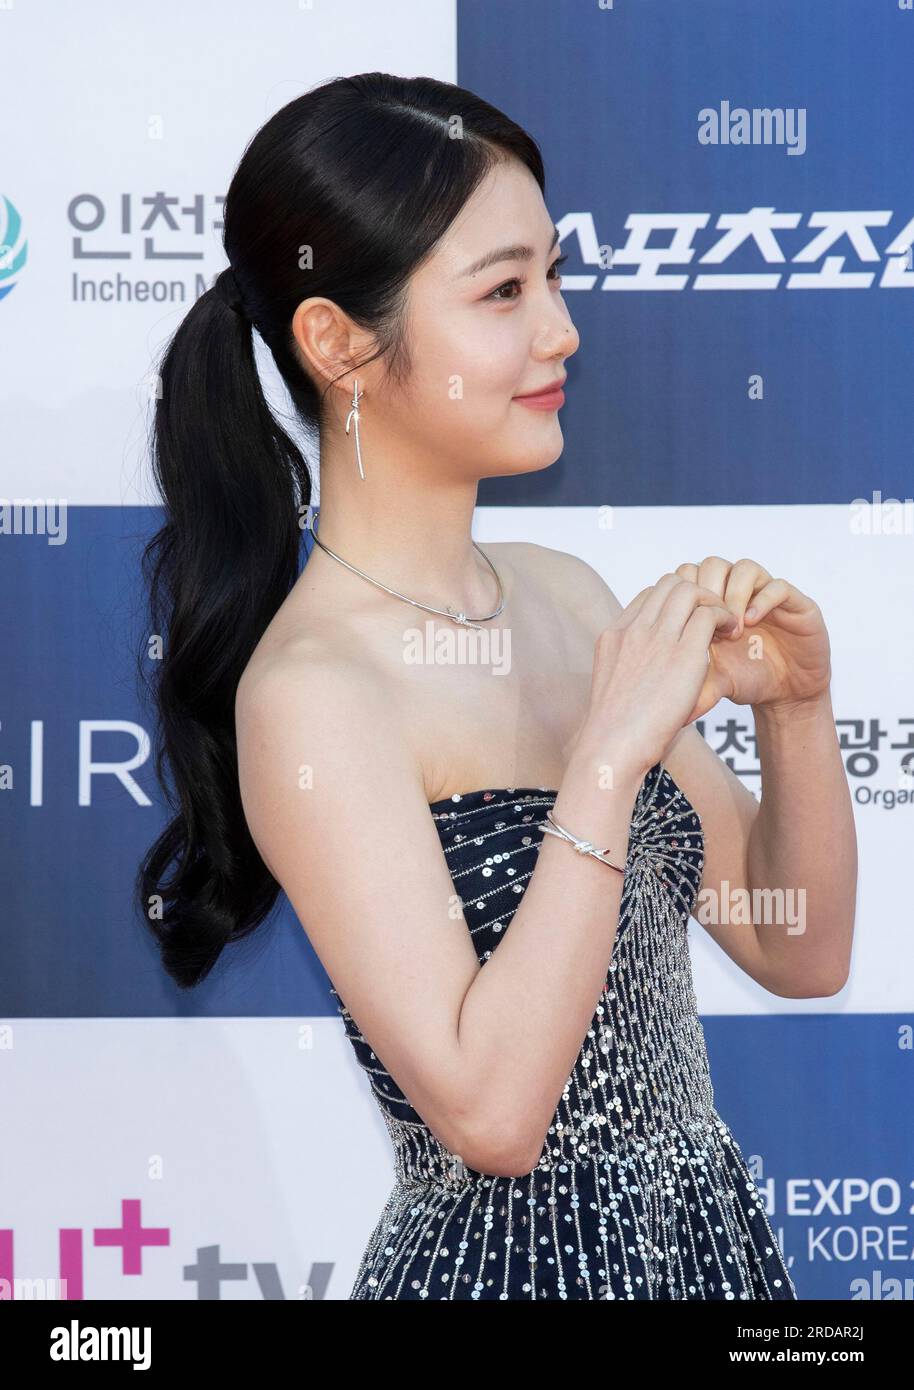 Incheon, South Korea. 19th July, 2023. South Korean actress Shin